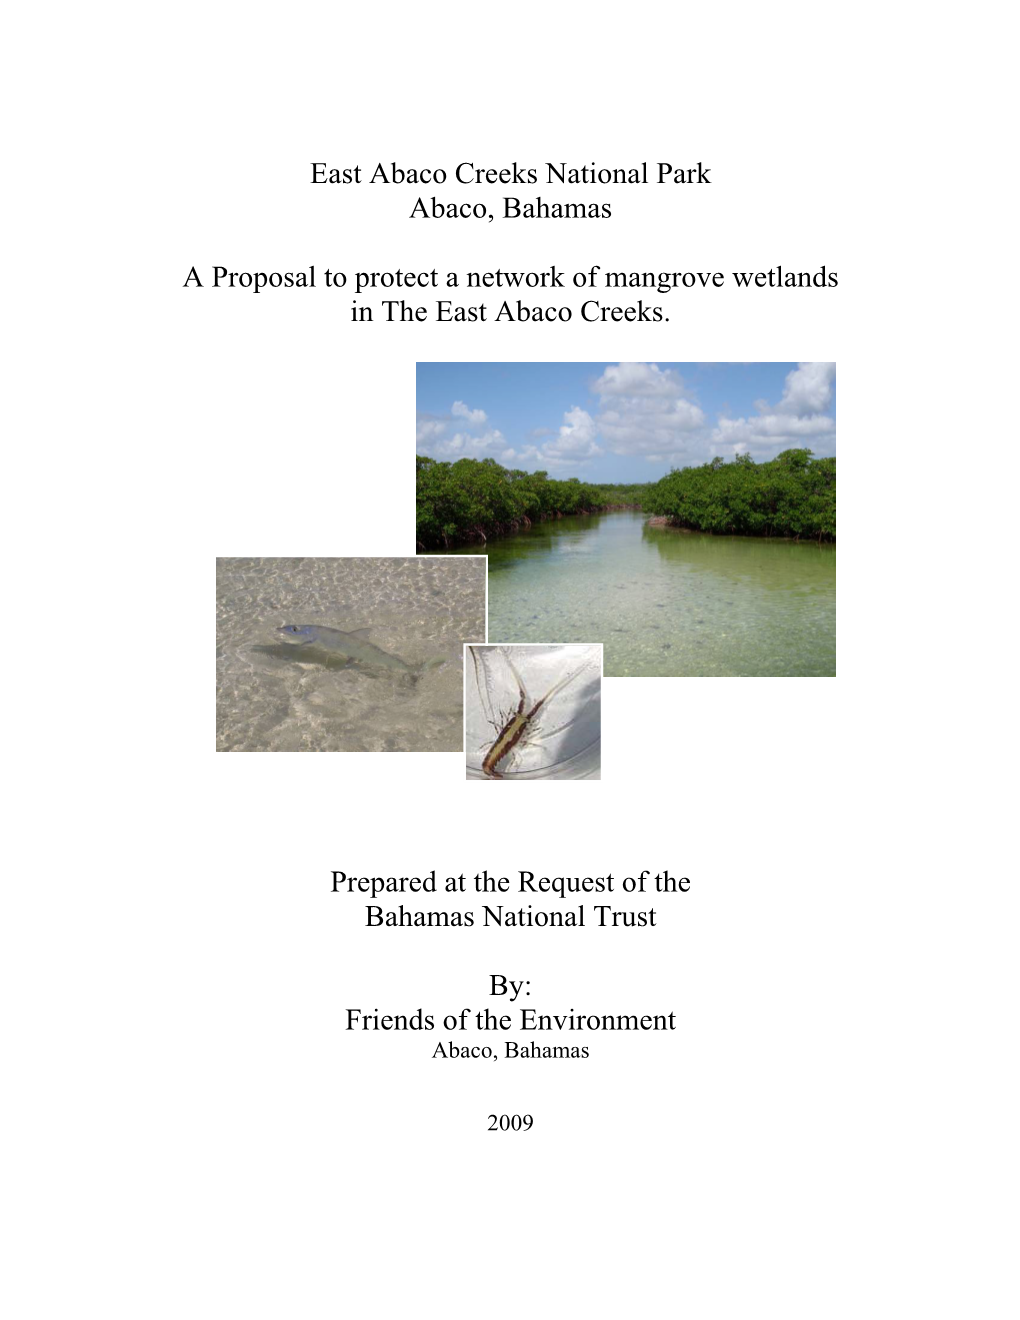 East Abaco Creeks National Park Proposal